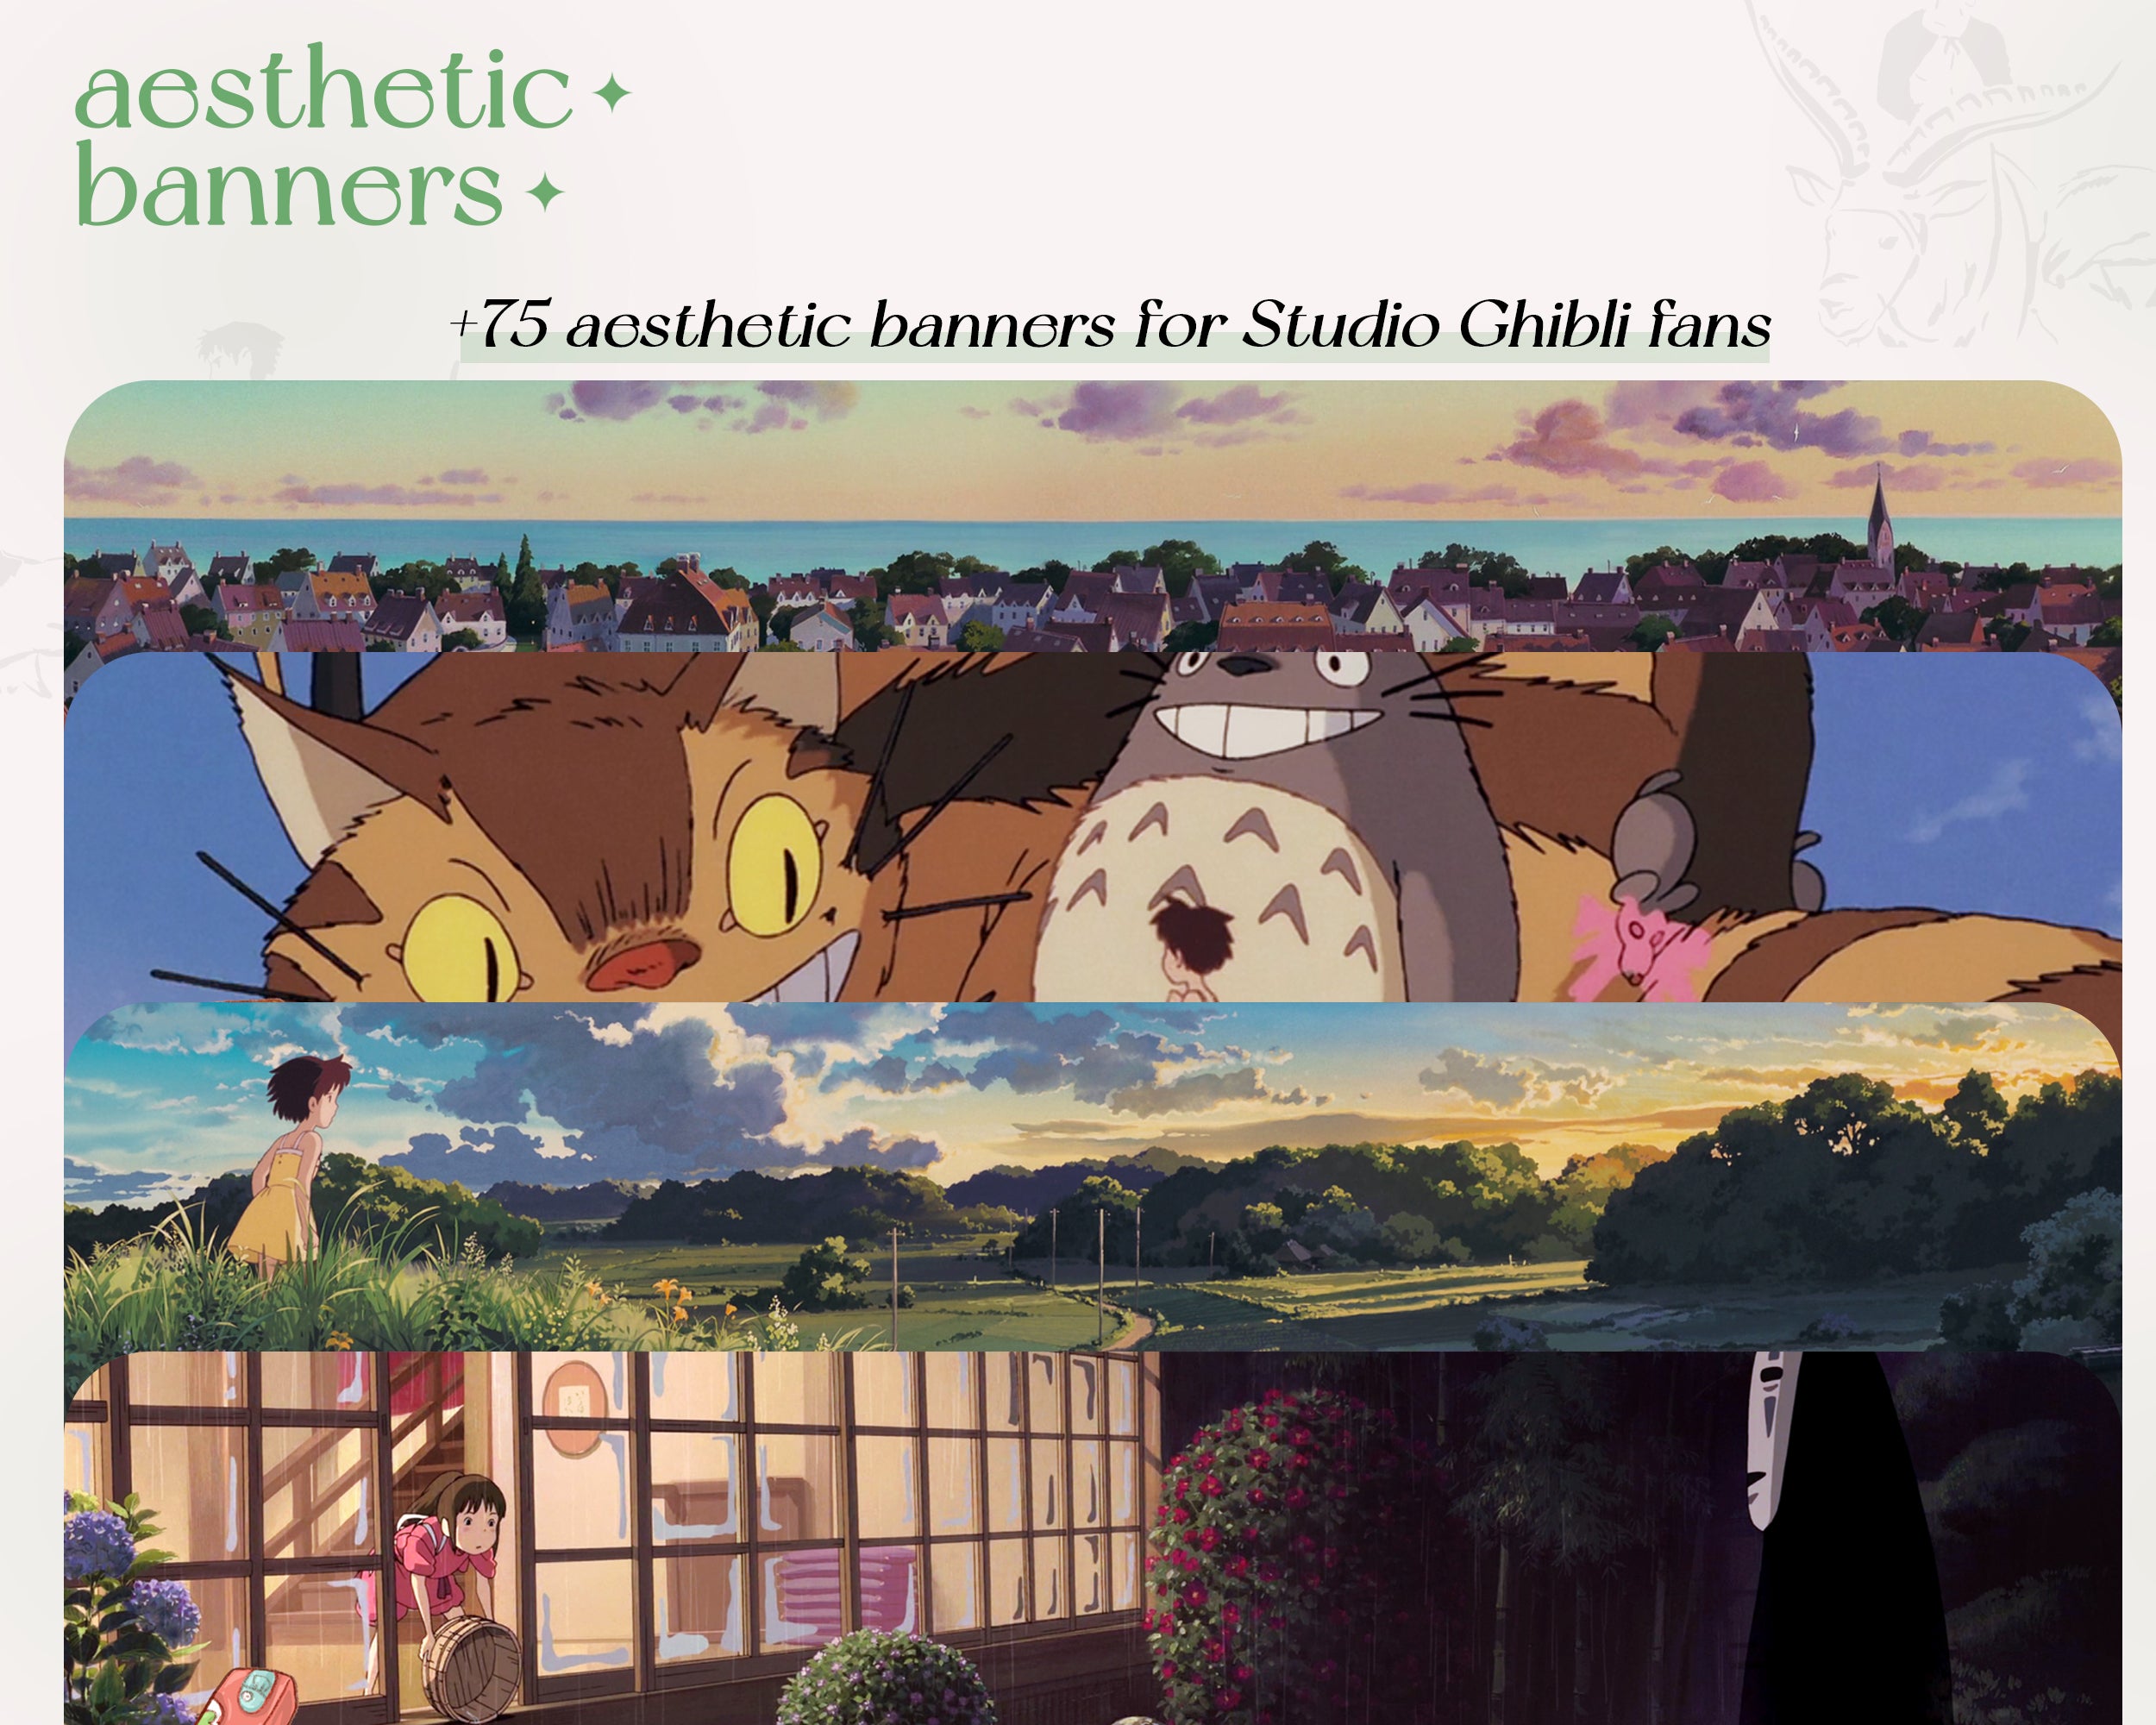 Studio Ghibli Life Planner Notion Template